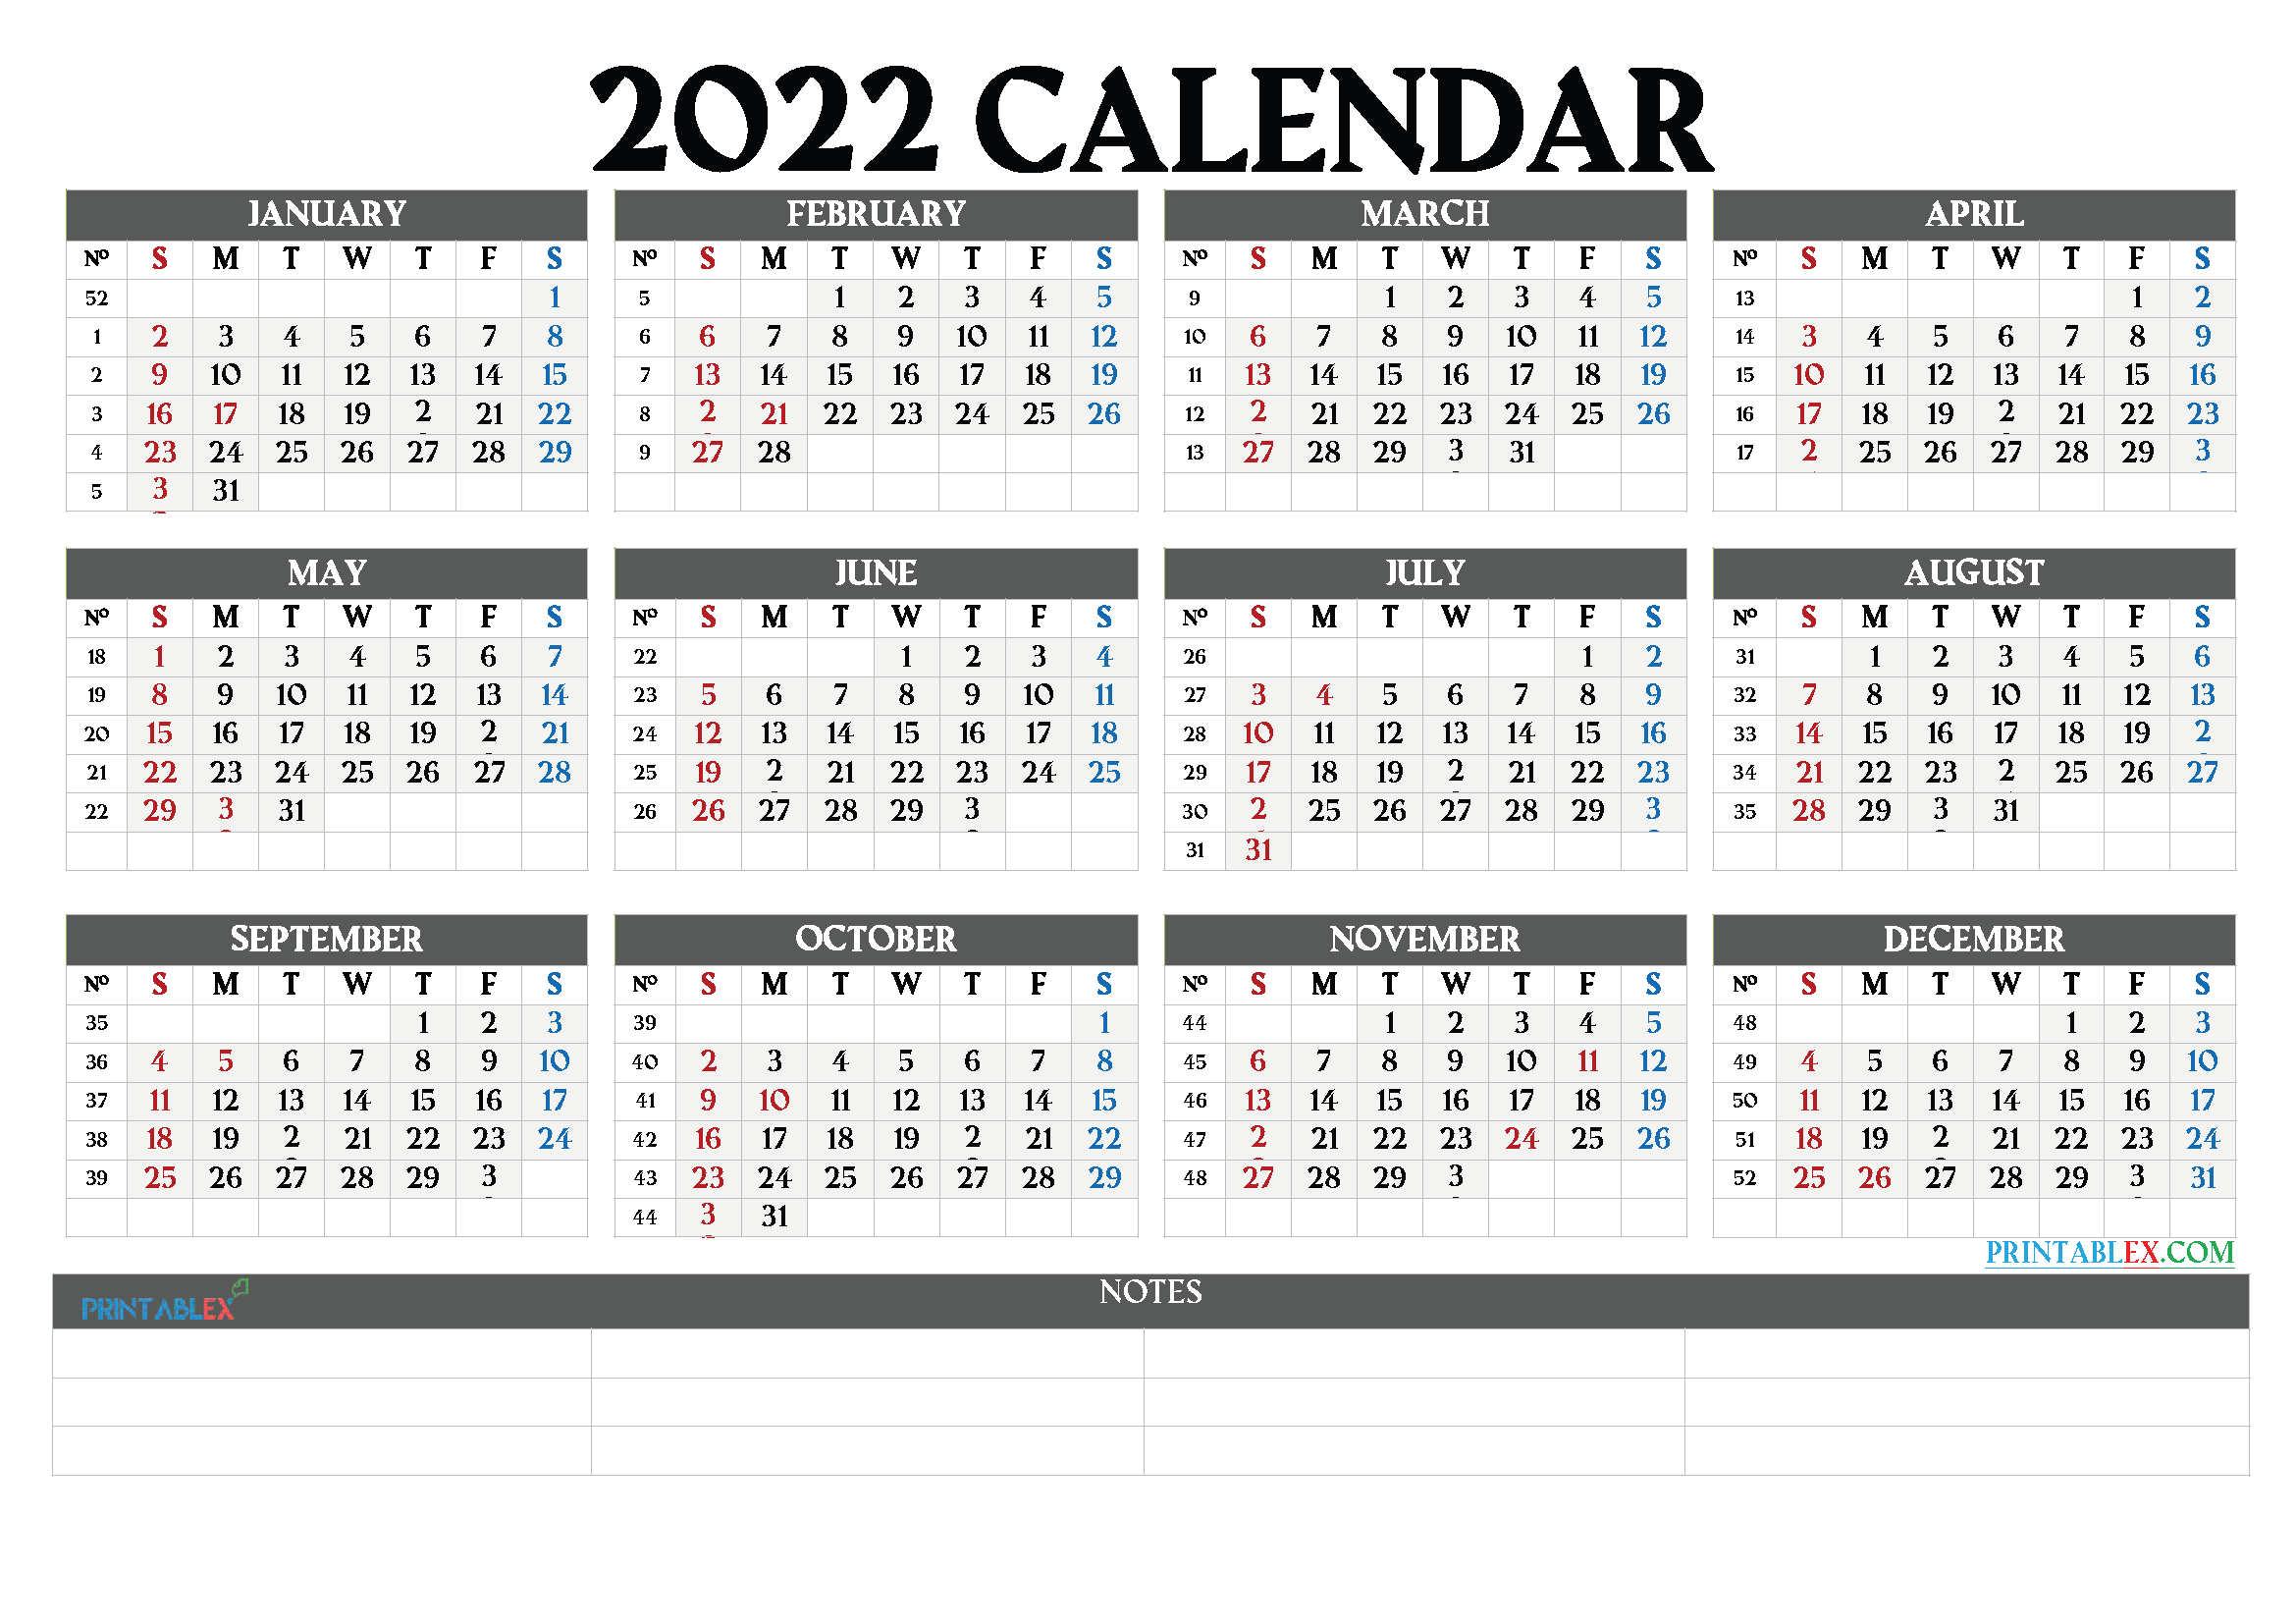 Printable Calendar Templates 2022 - 22Ytw63